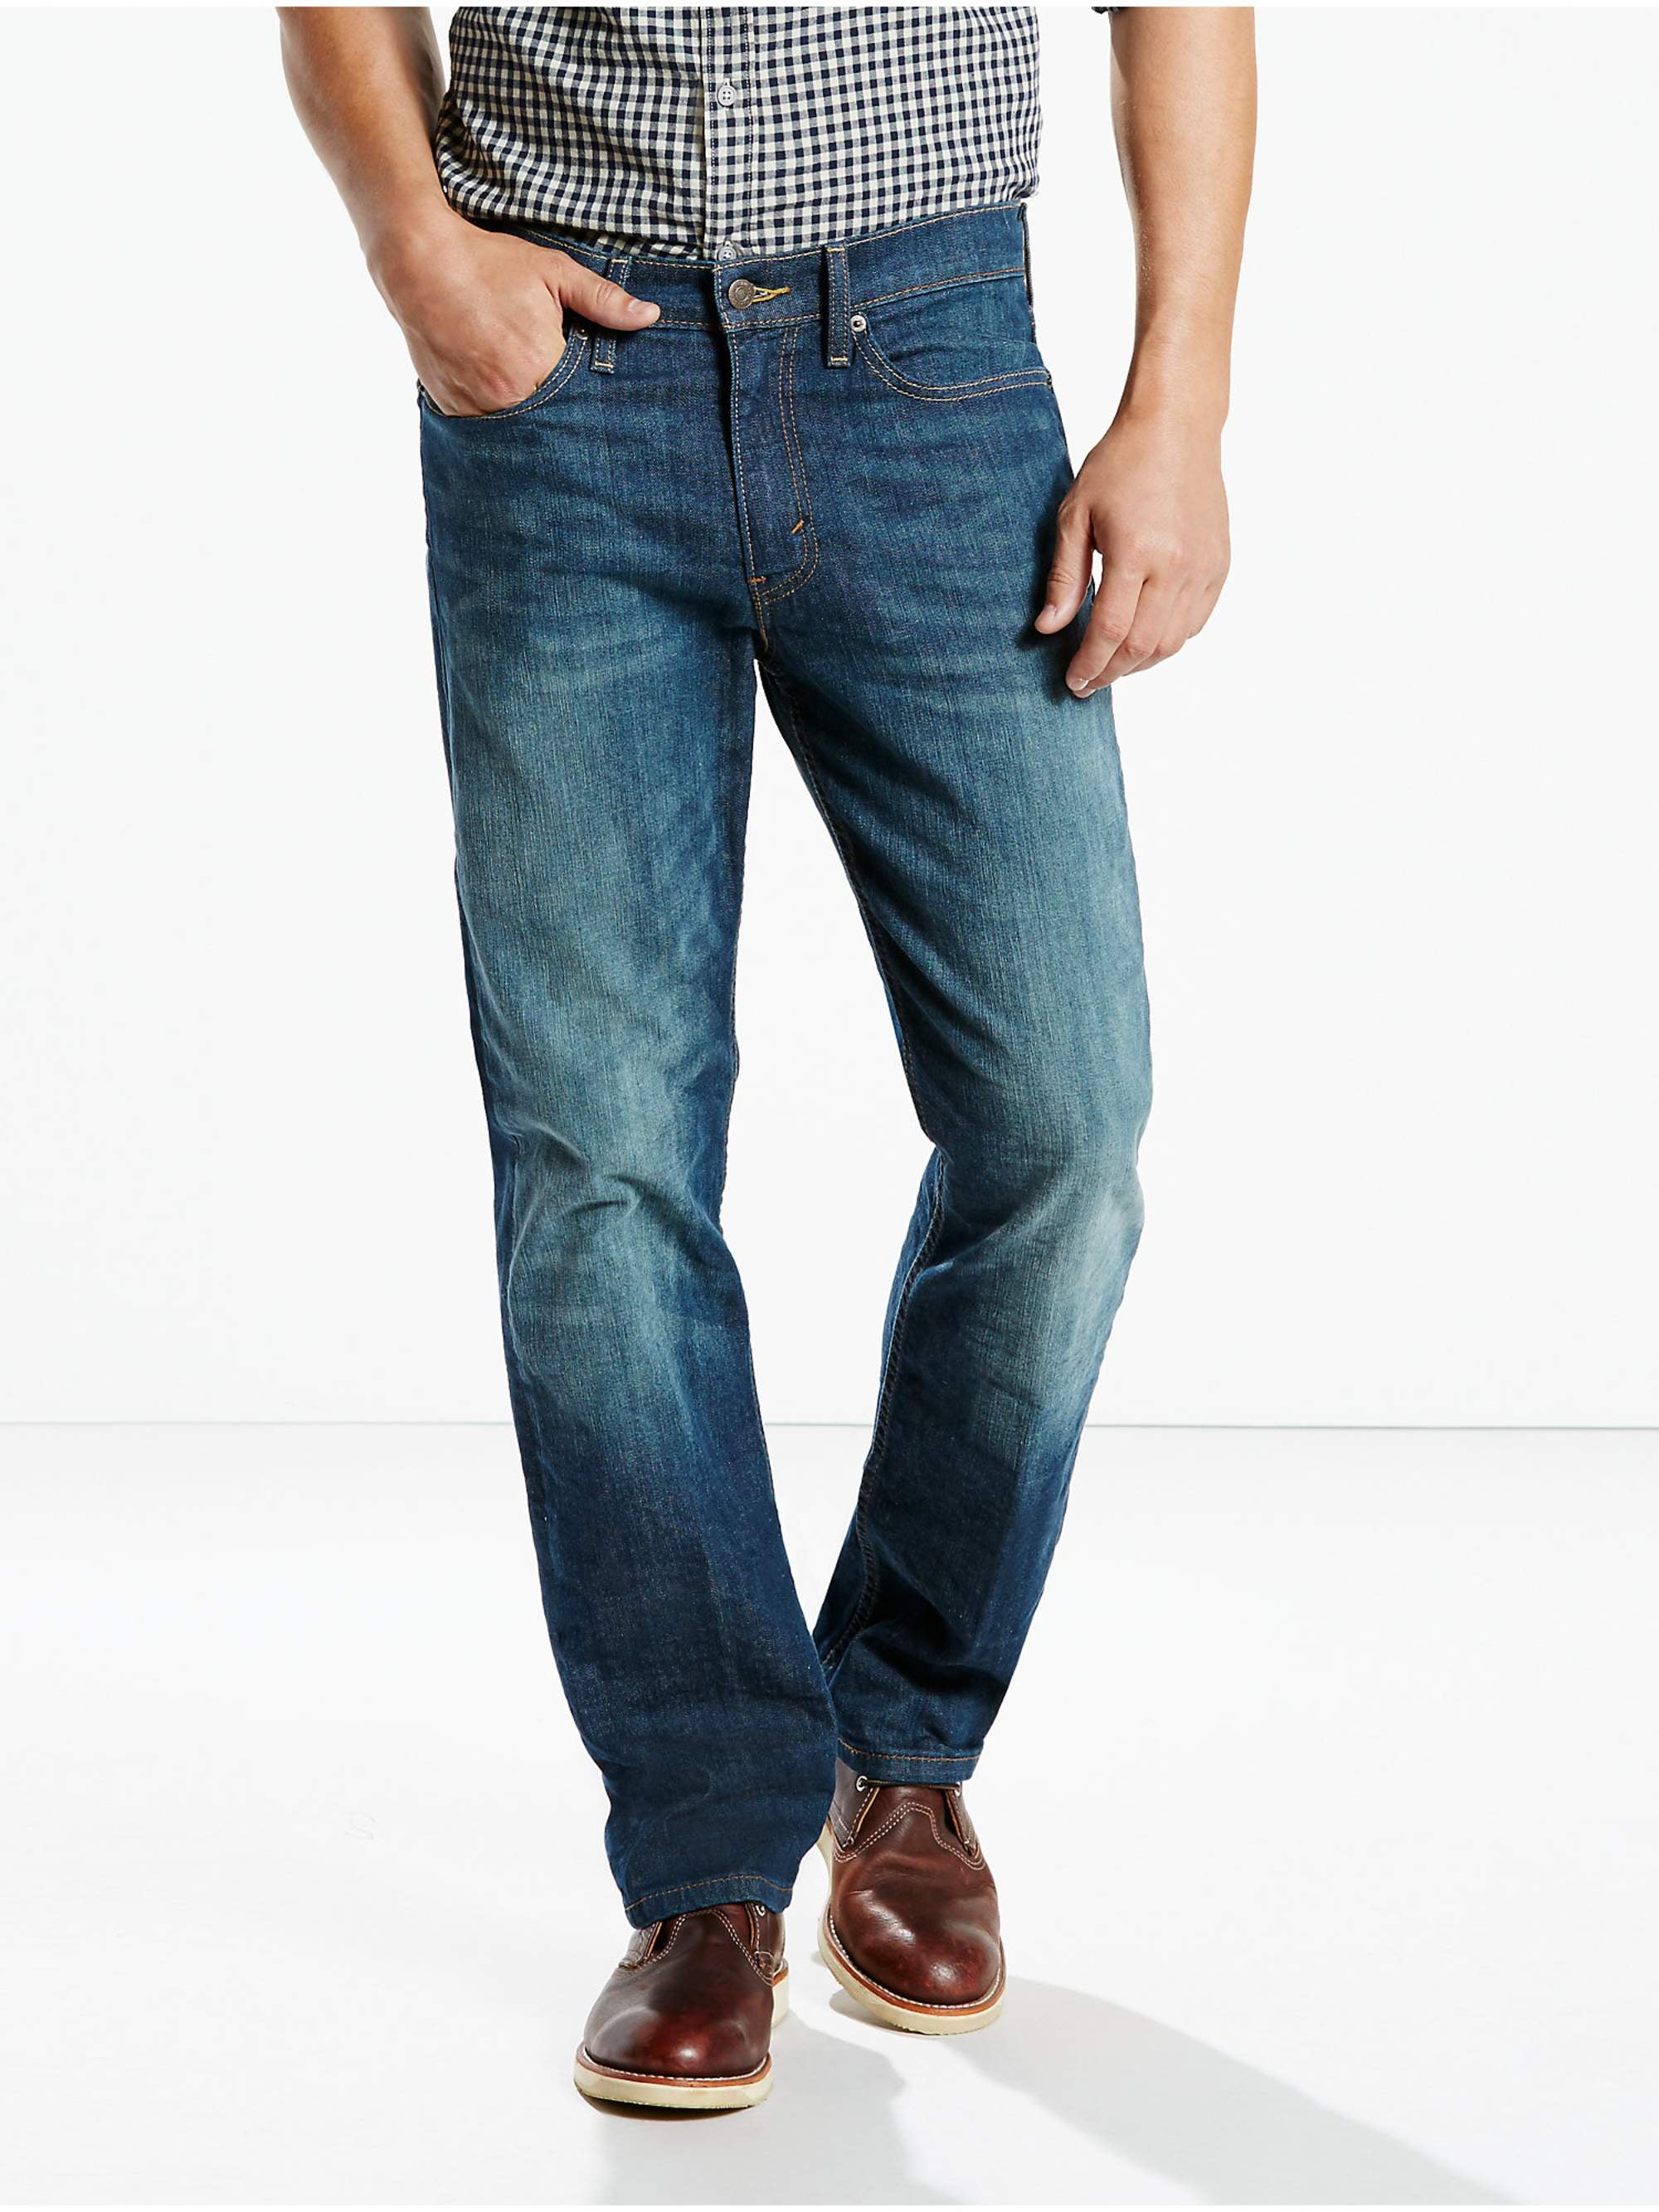 Duke relieve Pirate Levi's Men's 514 Straight Fit Jeans - Walmart.com